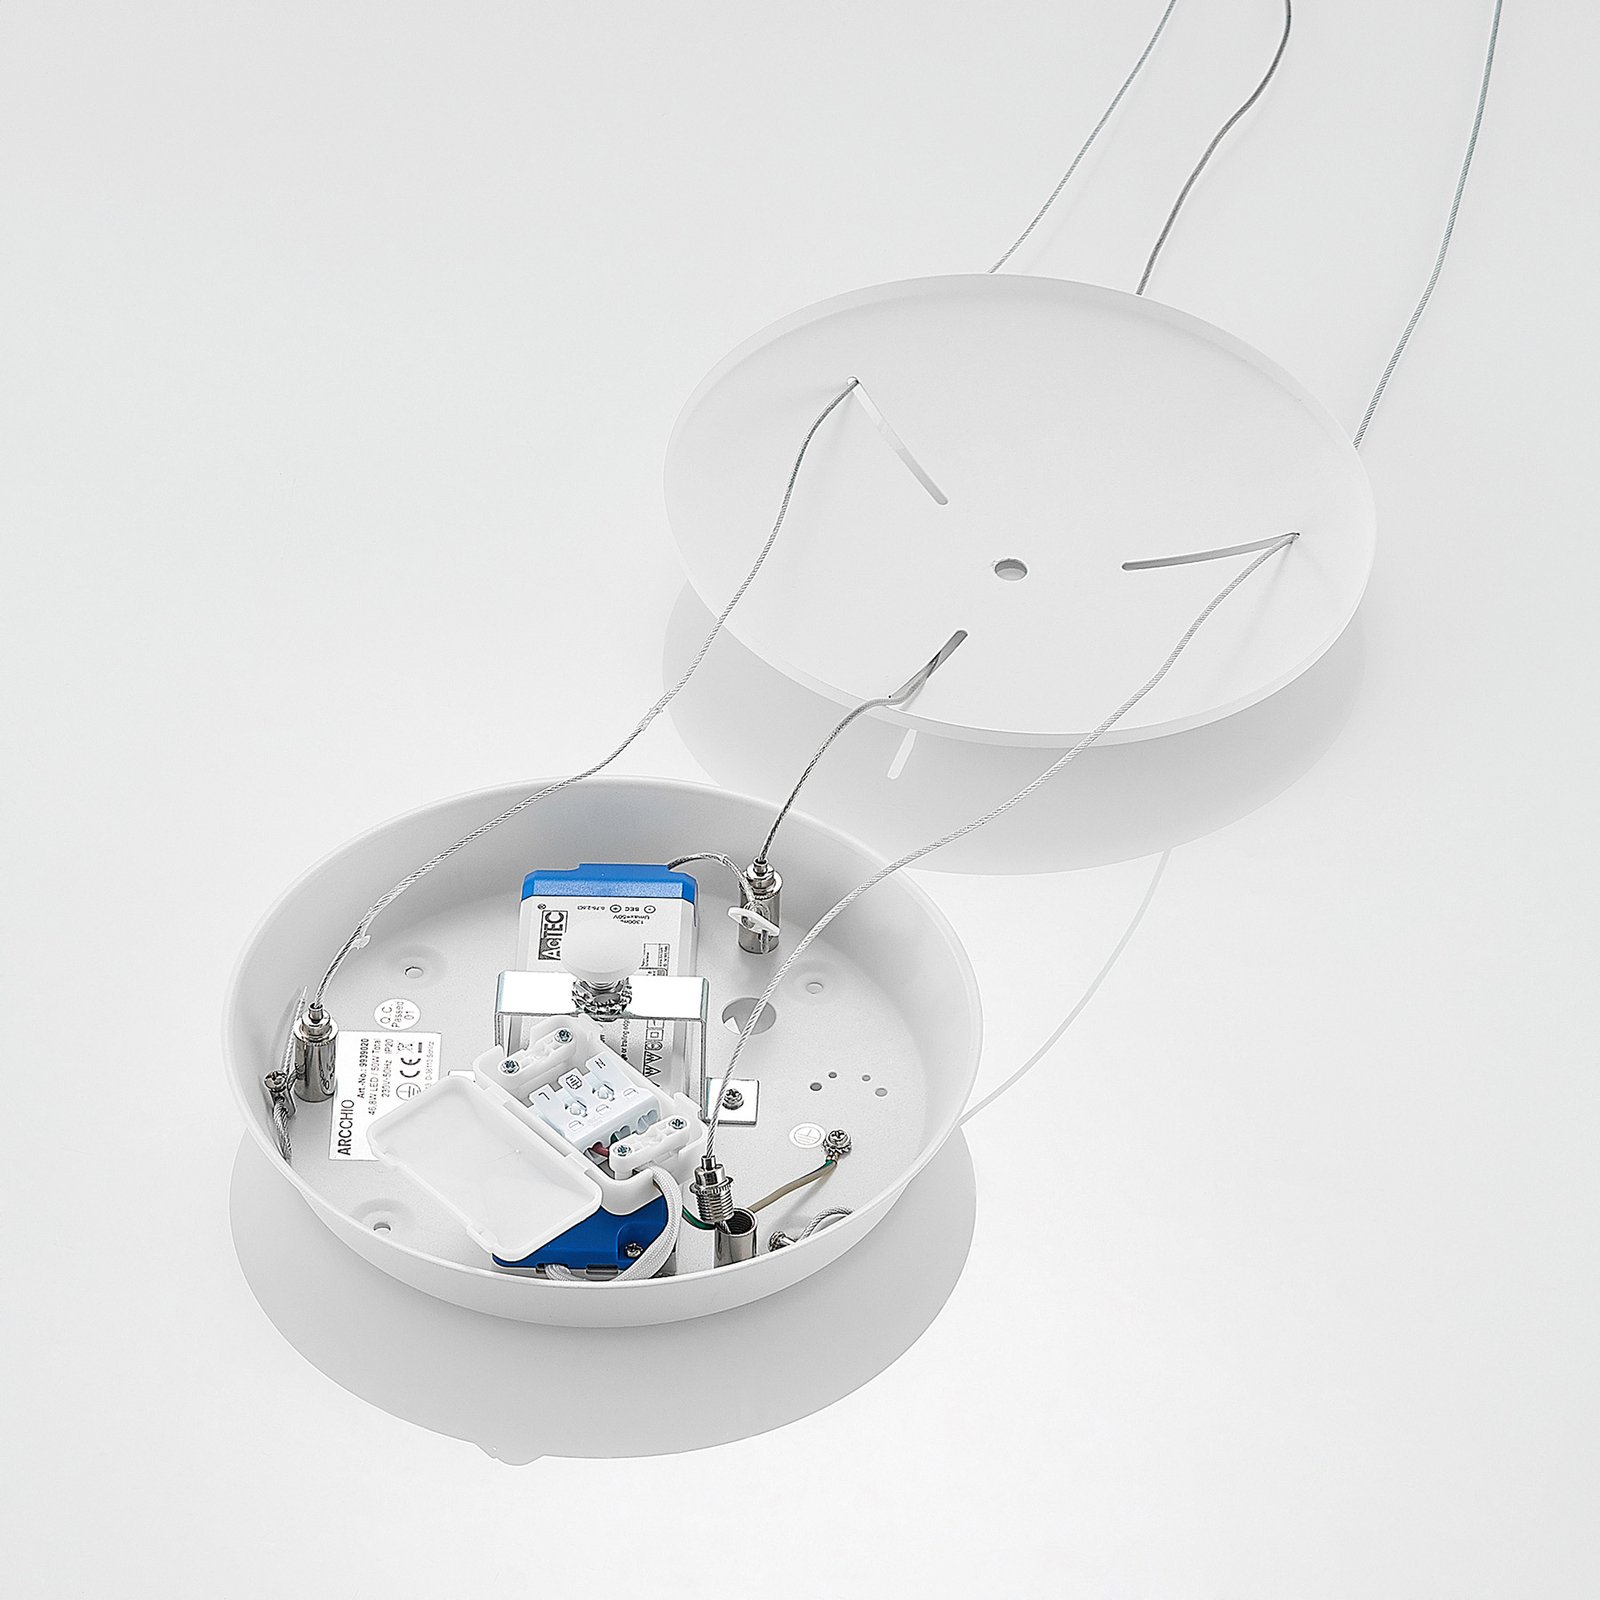 Arcchio Vivy LED hanging light, white, 58 cm